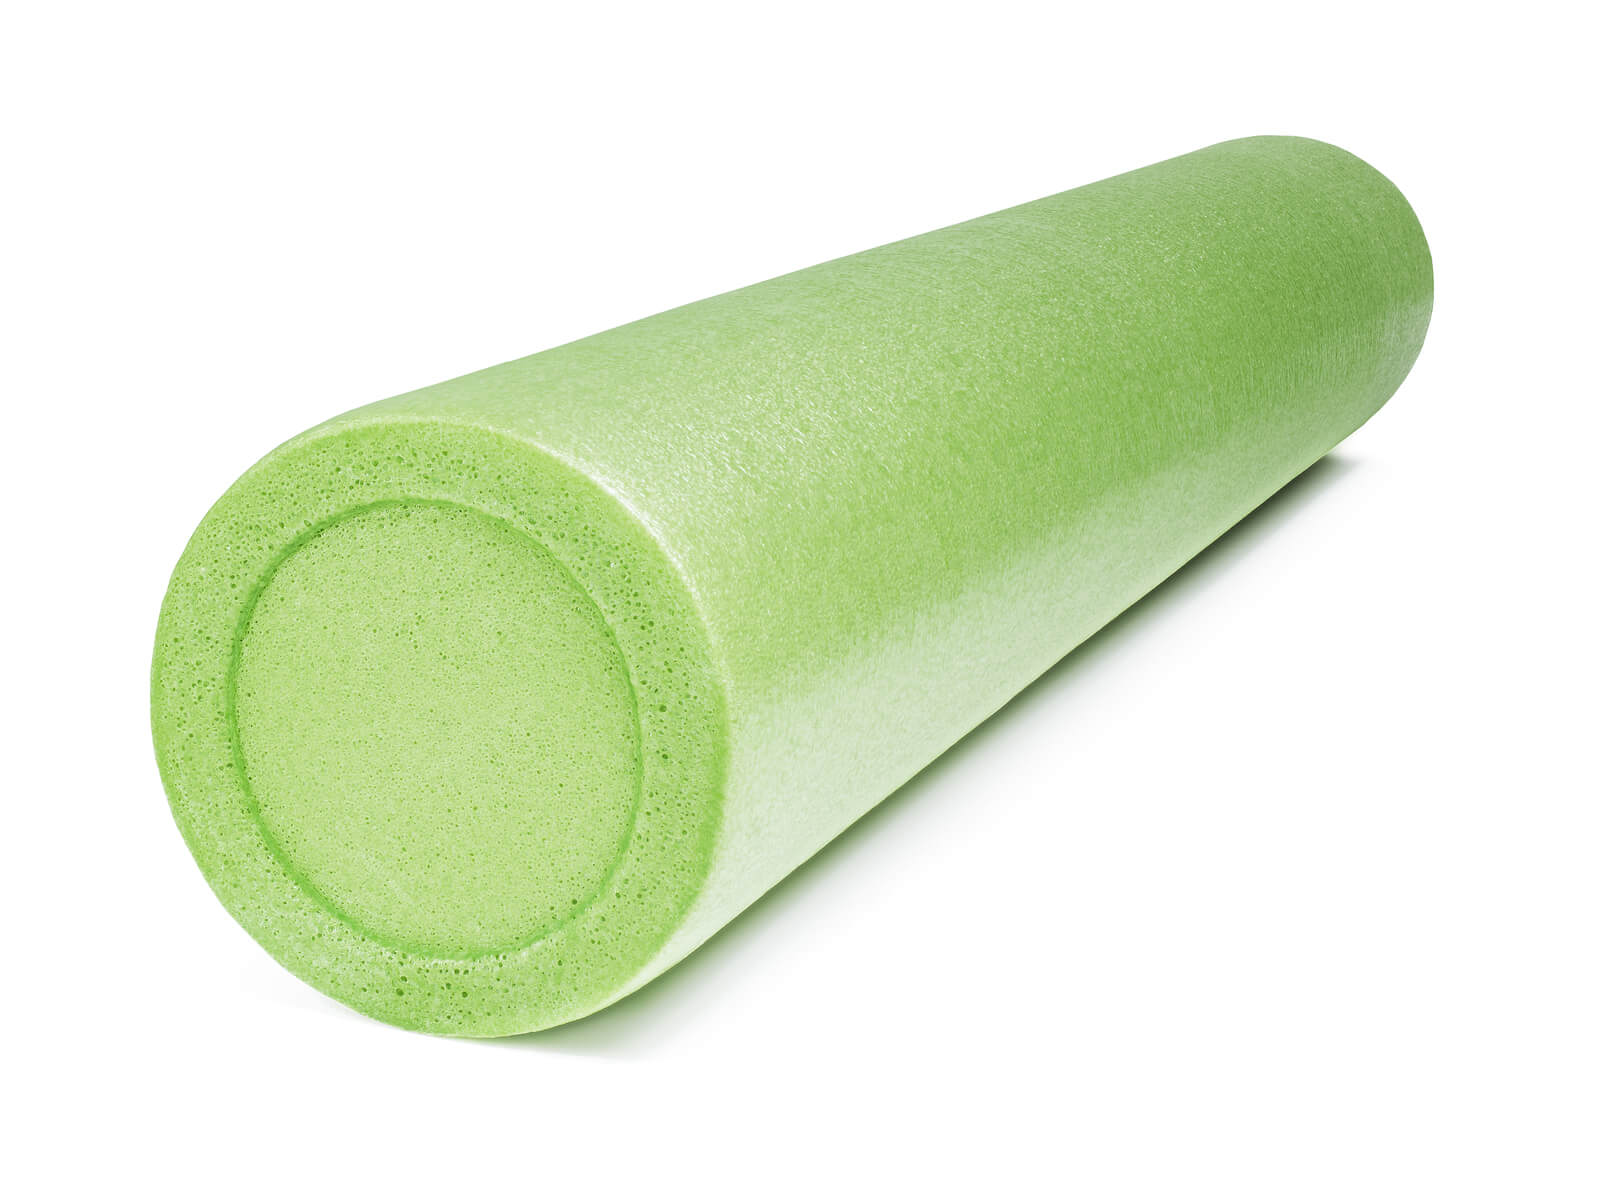 bigstock-A-green-foam-roller-isolated-o-61687874_1.jpg